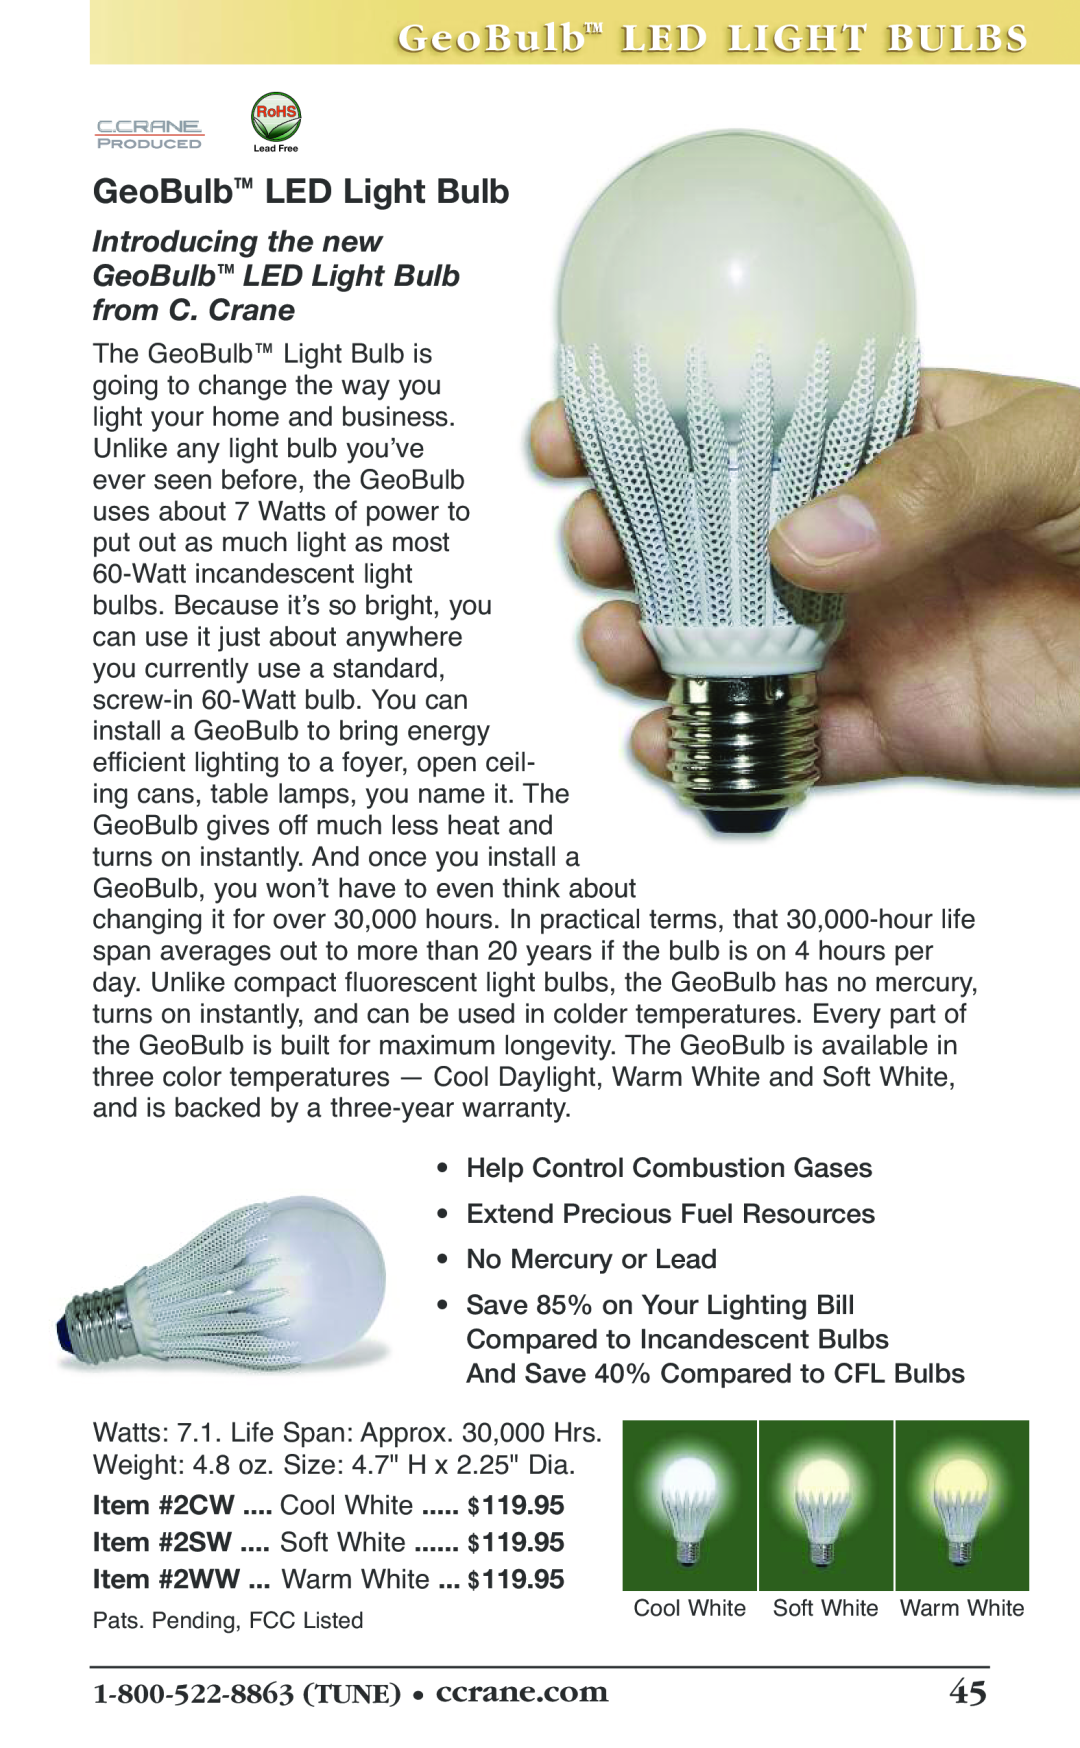 C. Crane 19f manual Ge oBullb LED LI GHT BULBBS, Introducing the new GeoBulb LED Light Bulb, from C. Crane 